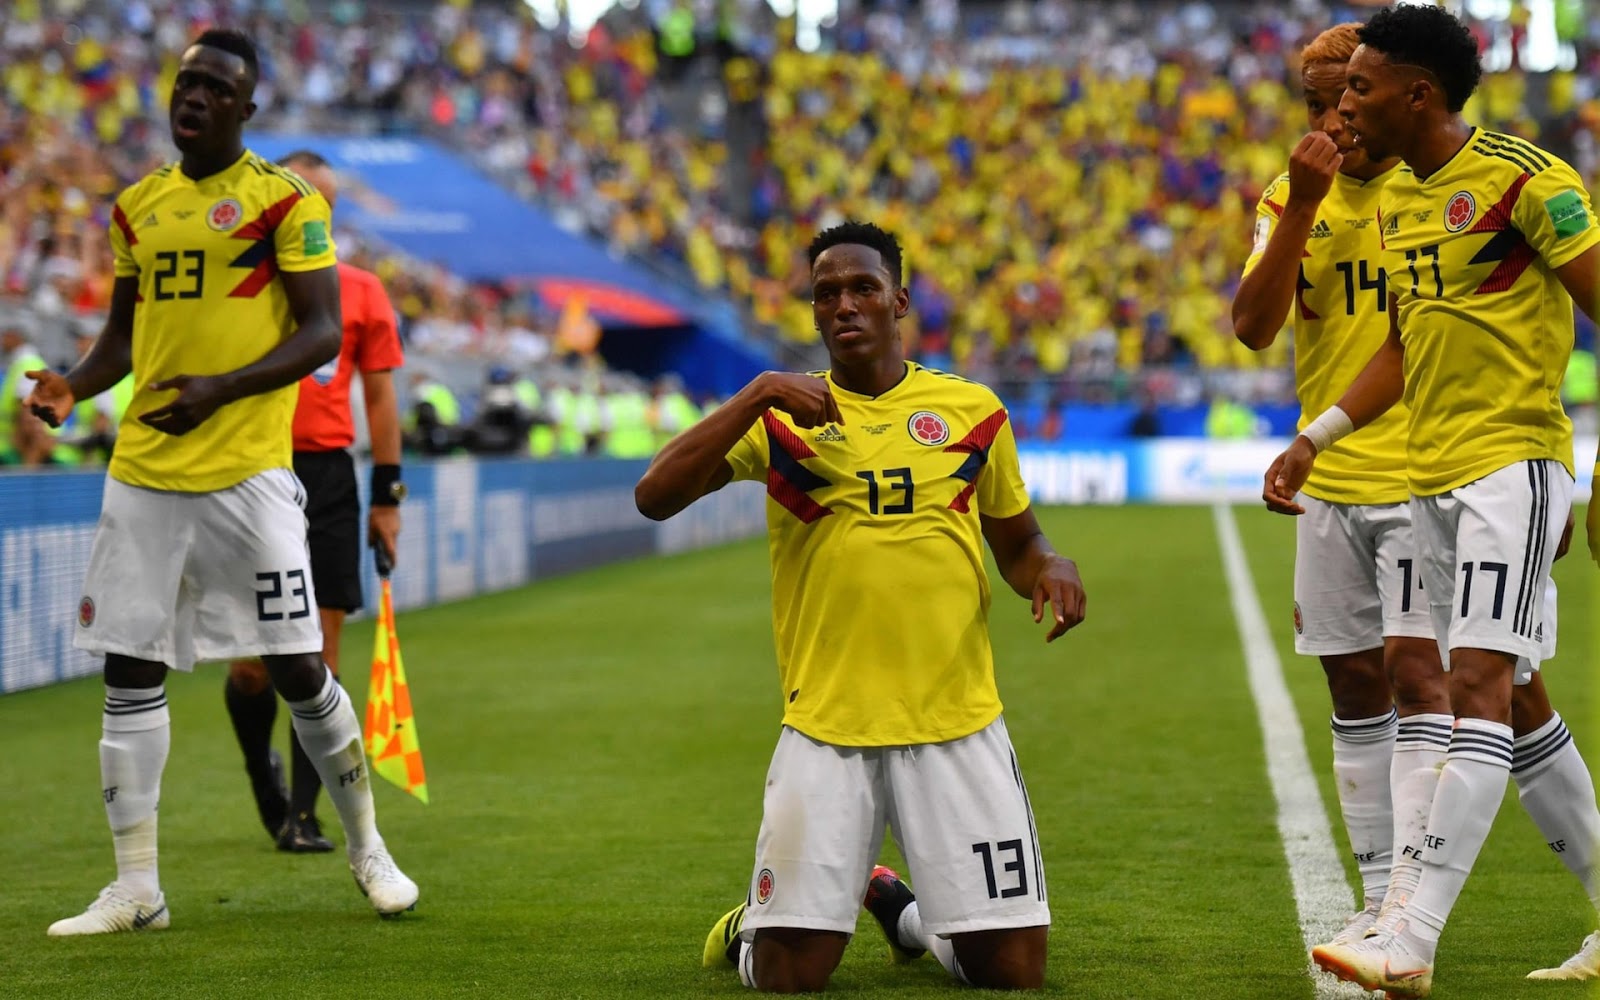 Colombia vs Senegal [1:0] - FIFA World Cup 2018 - GhanaPa.com - Ghana